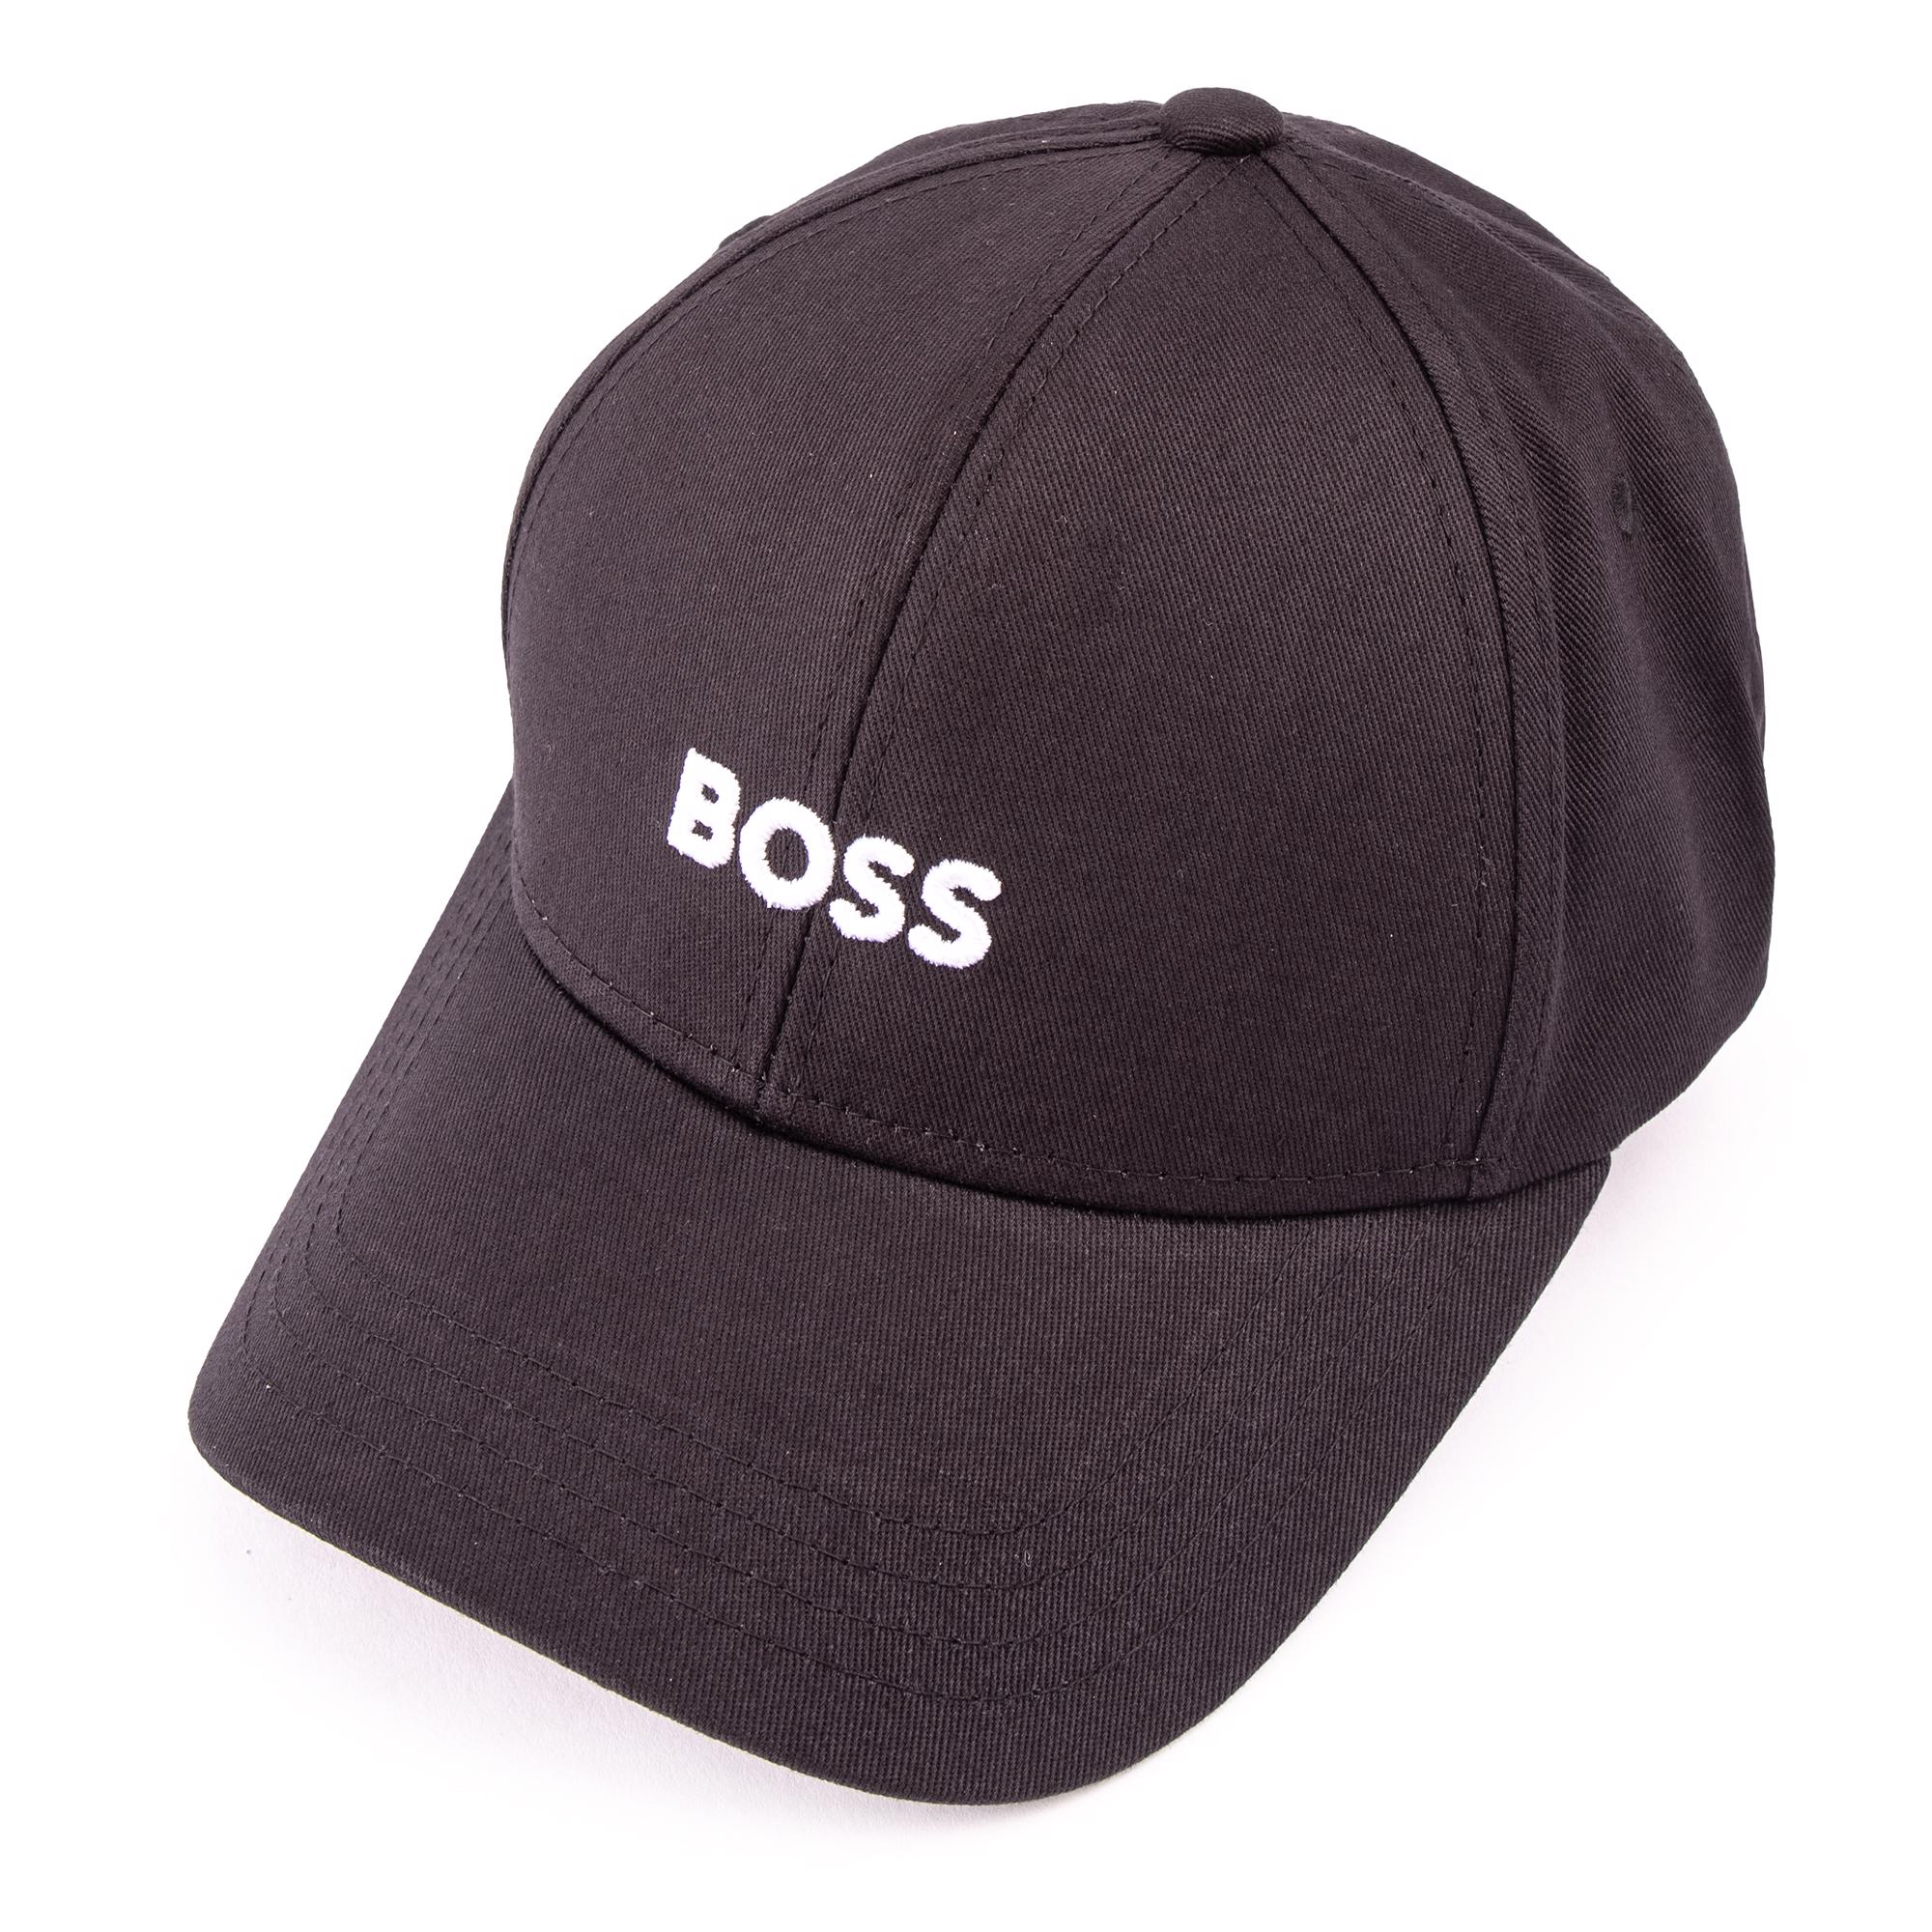 BOSS Mens | Hats eBay Zed Black Cap